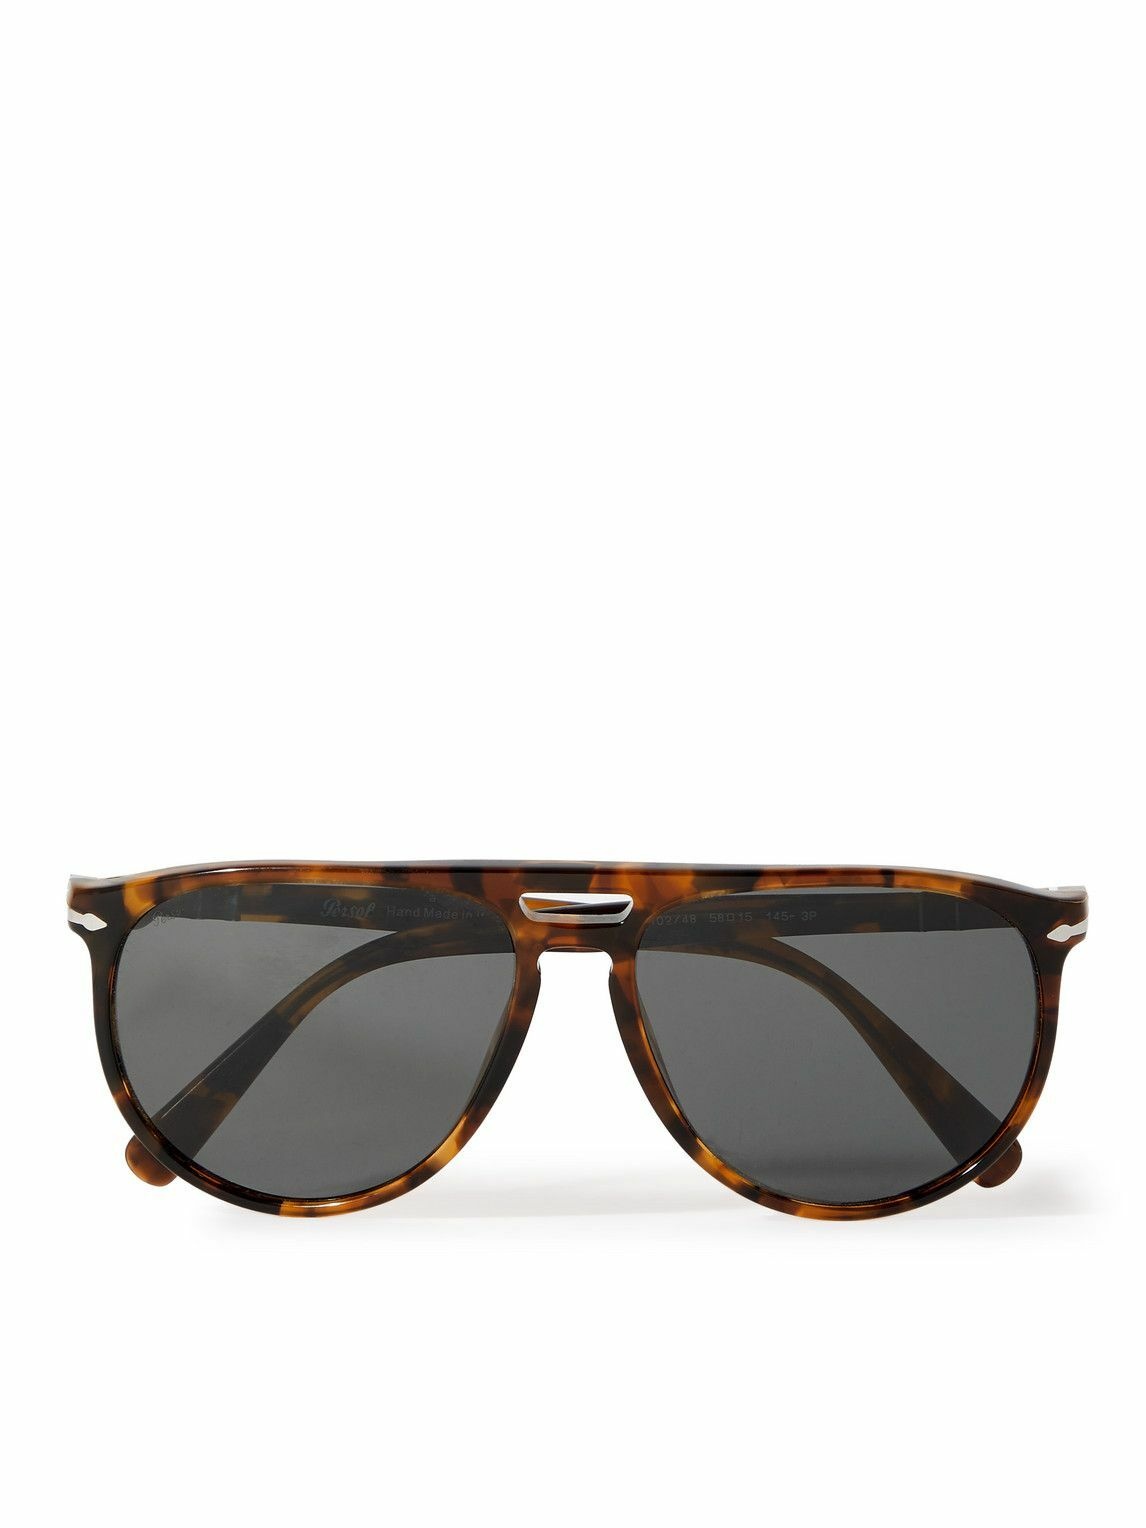 Persol - Aviator-Style Tortoiseshell Acetate Sunglasses Persol